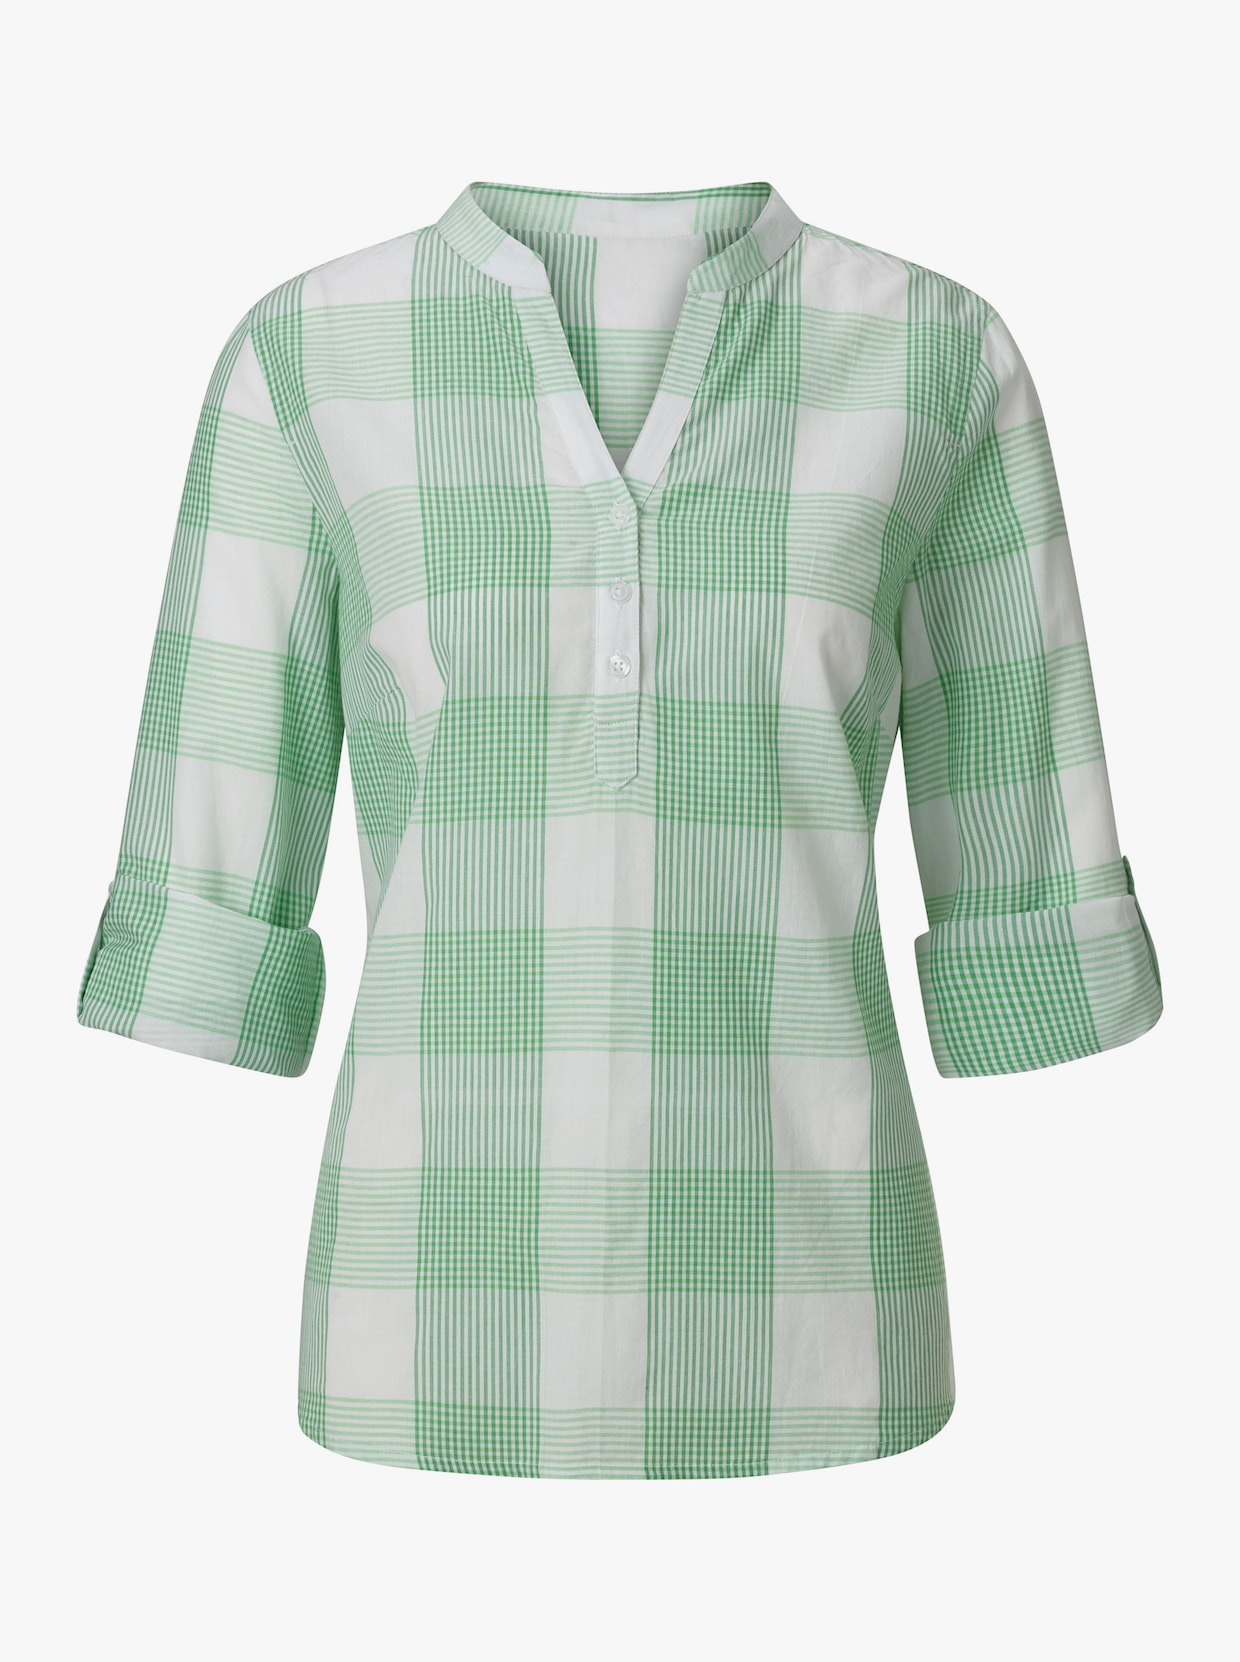 Katoenen blouse - groen/wit geruit